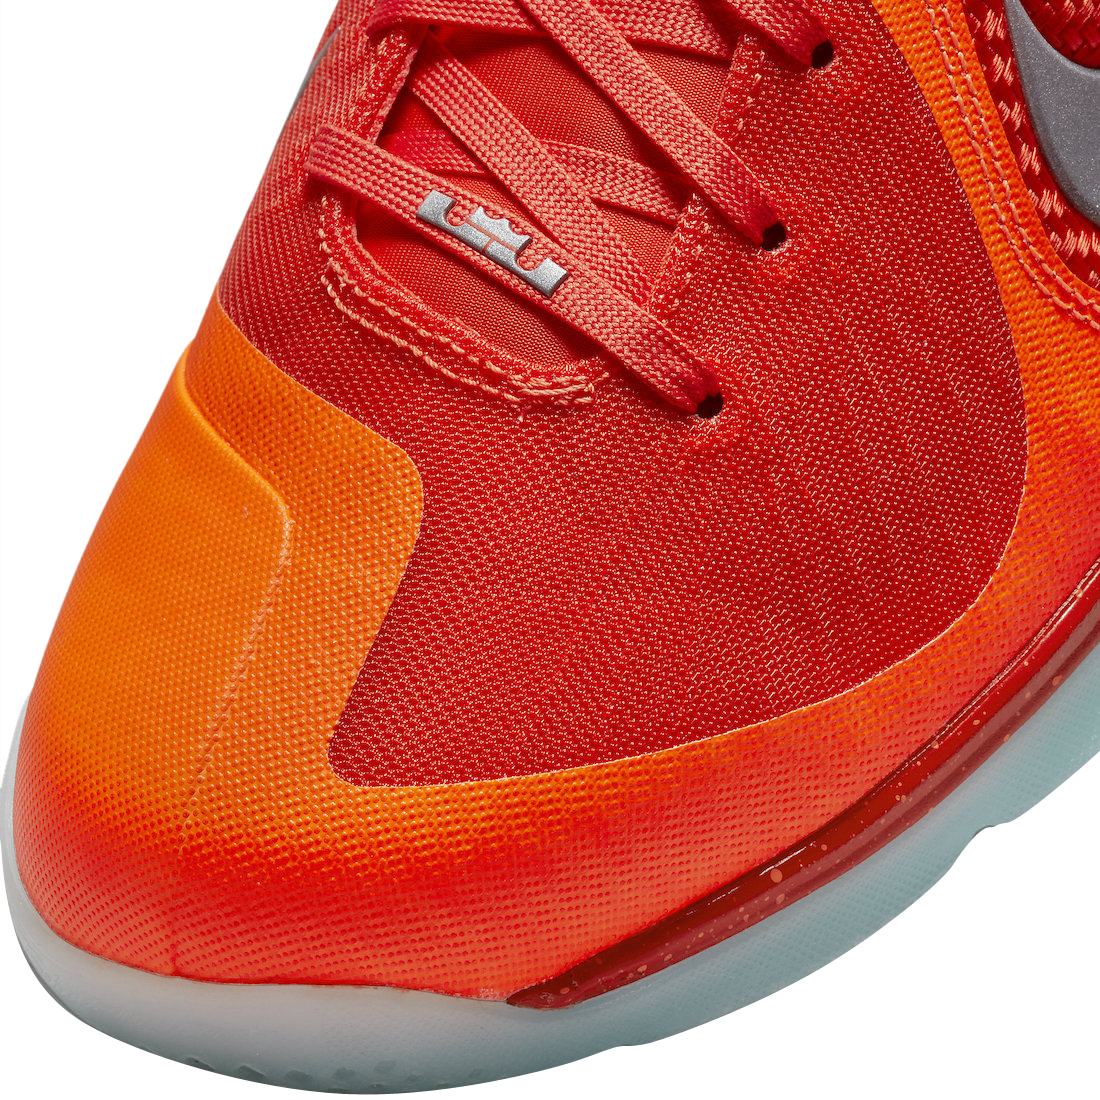 Nike LeBron 9 Big Bang 2022 DH8006-800